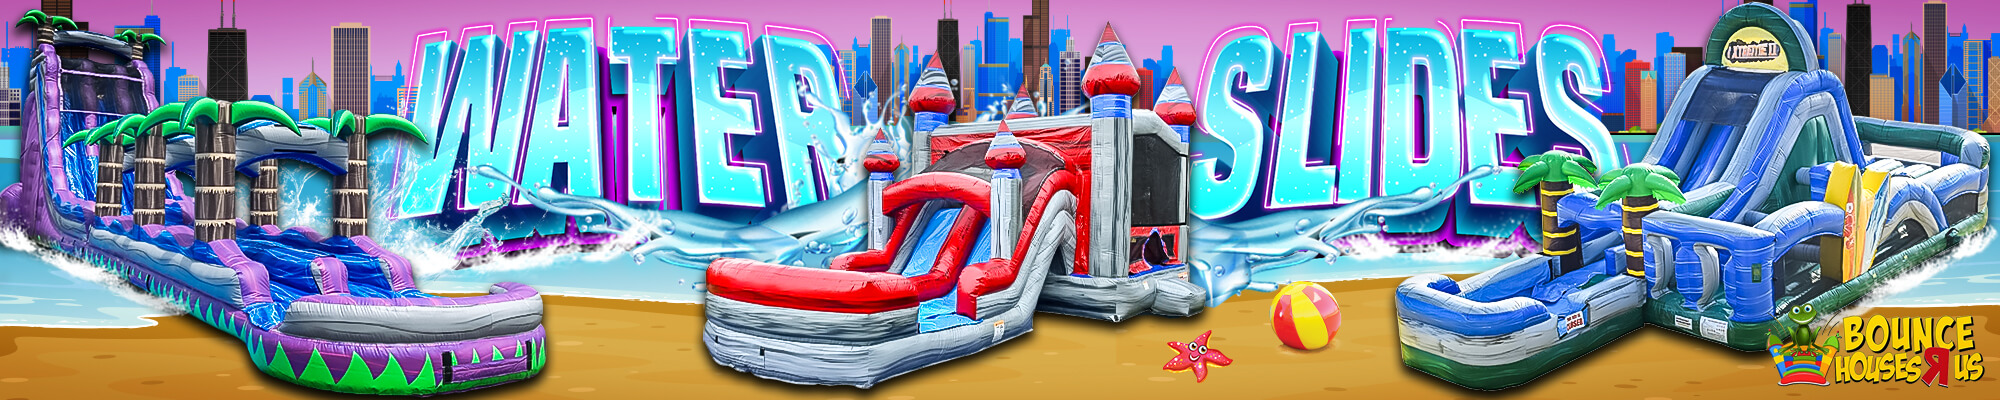 Inflatable Water Slide Rentals Chicago 